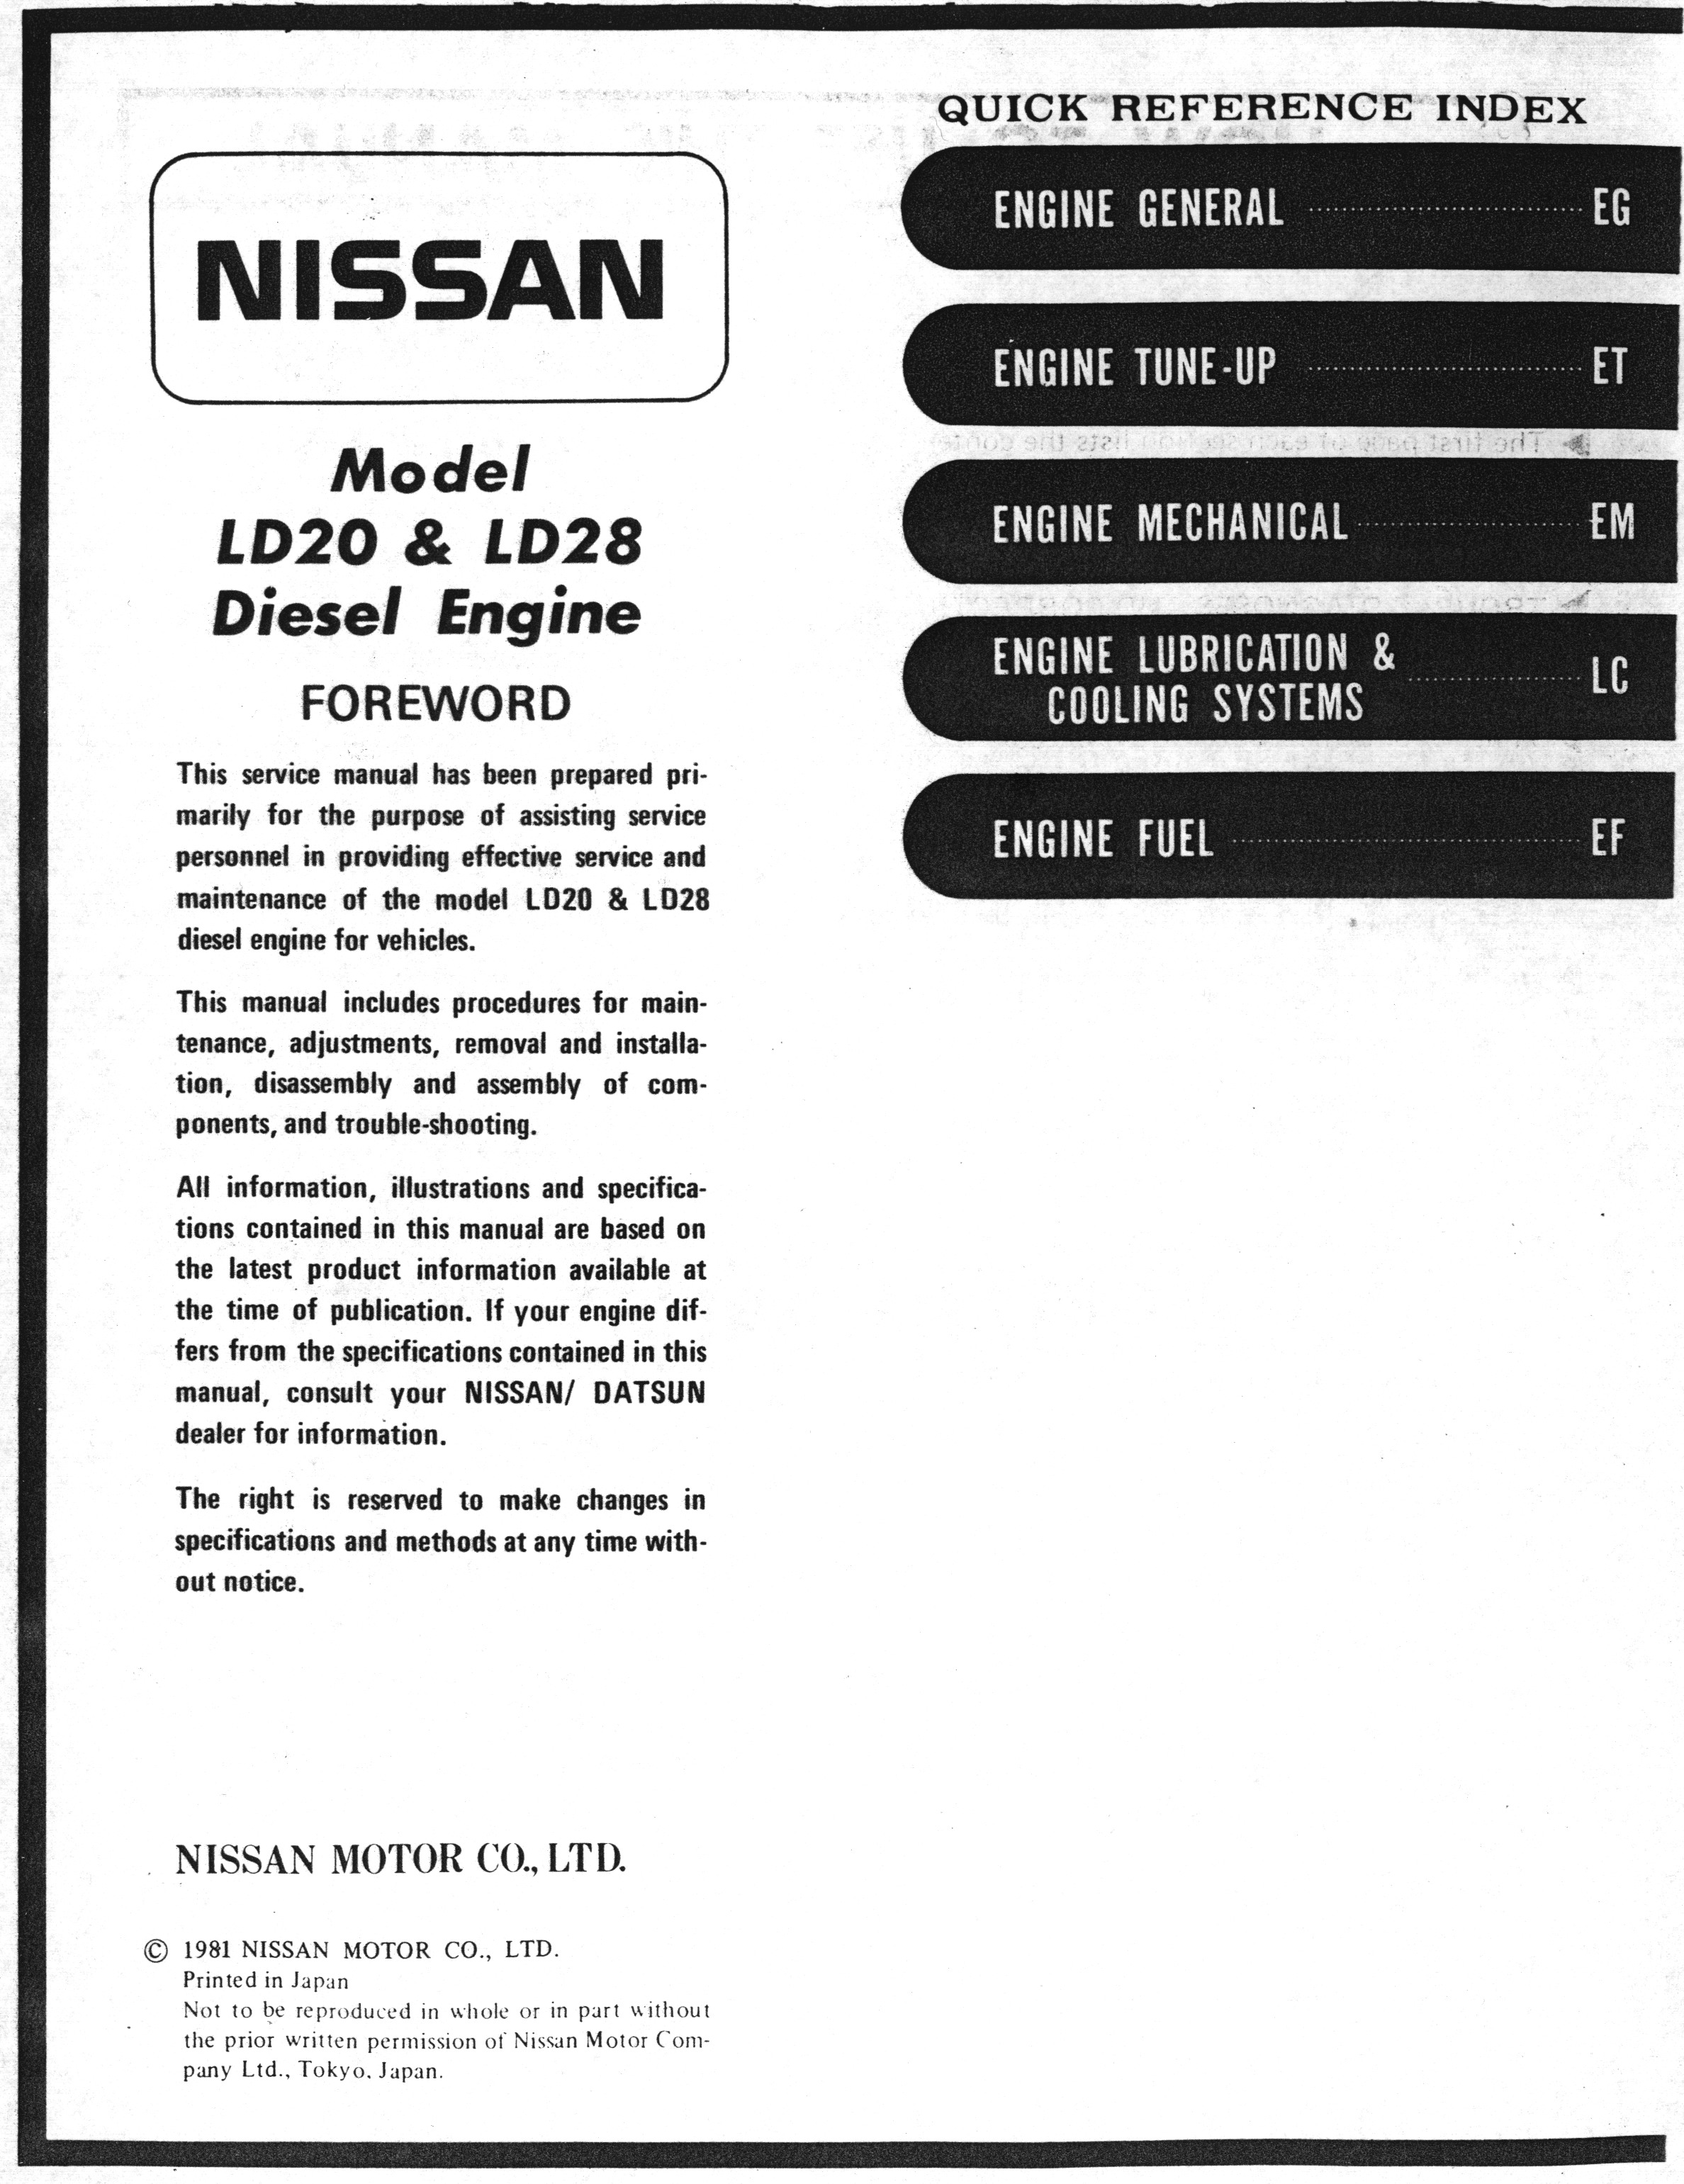 Manual nissan ld28 manual #2